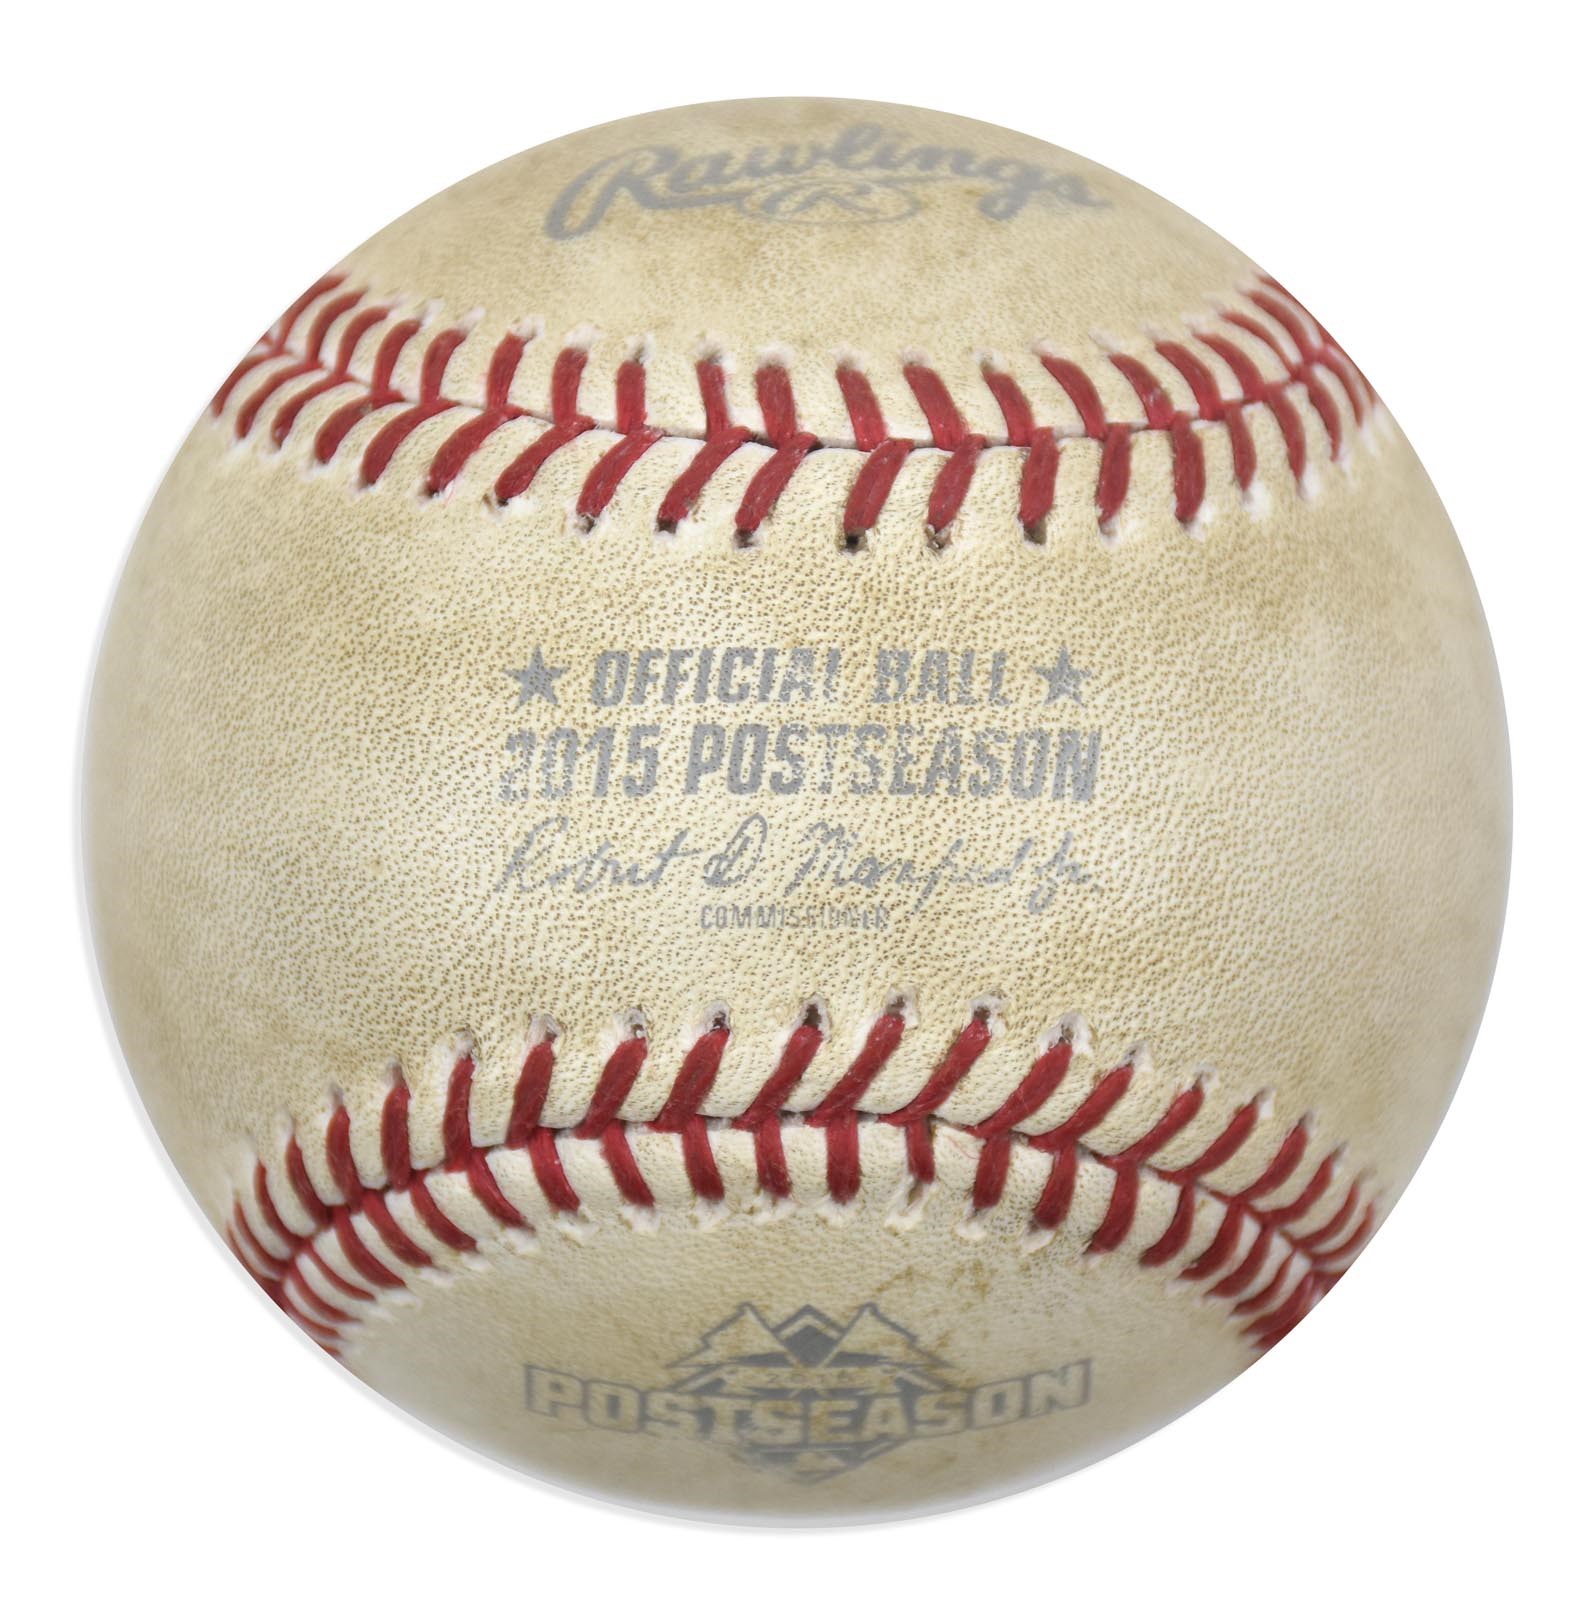 Baseball Equipment - 2015 ALDS Game 5 Jose Bautista "Bat Flip" Home Run Ball (LOA from Fan Who Caught It)